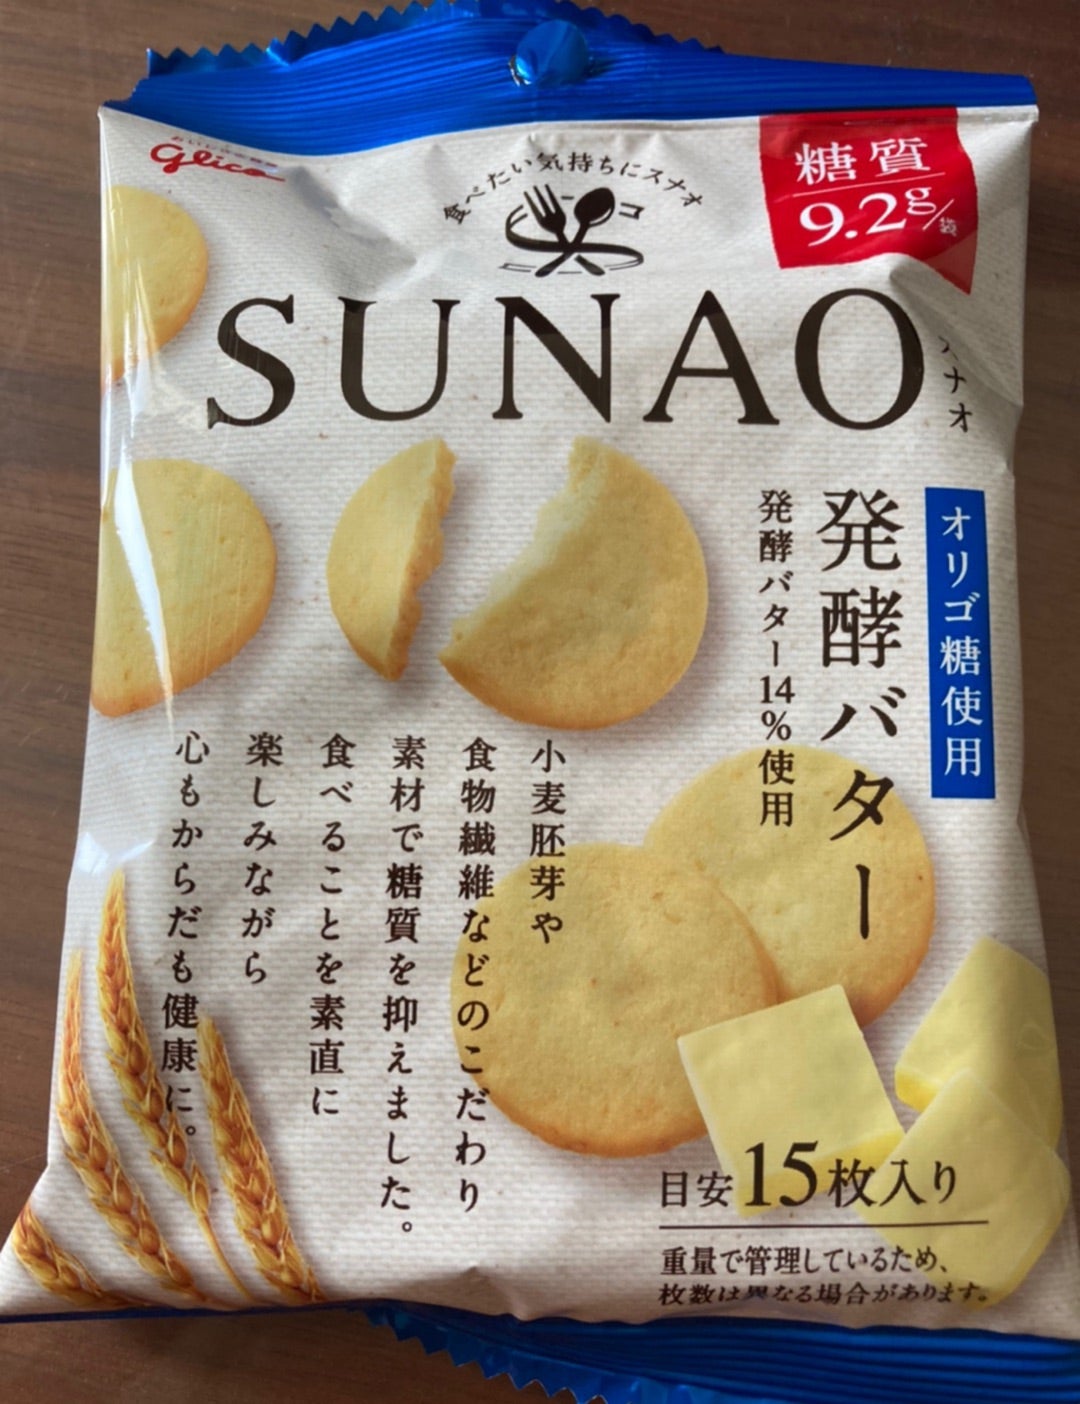 SUNAO 発酵バターを食べてみた！ | ミーナのマイペースな日々の生活✨